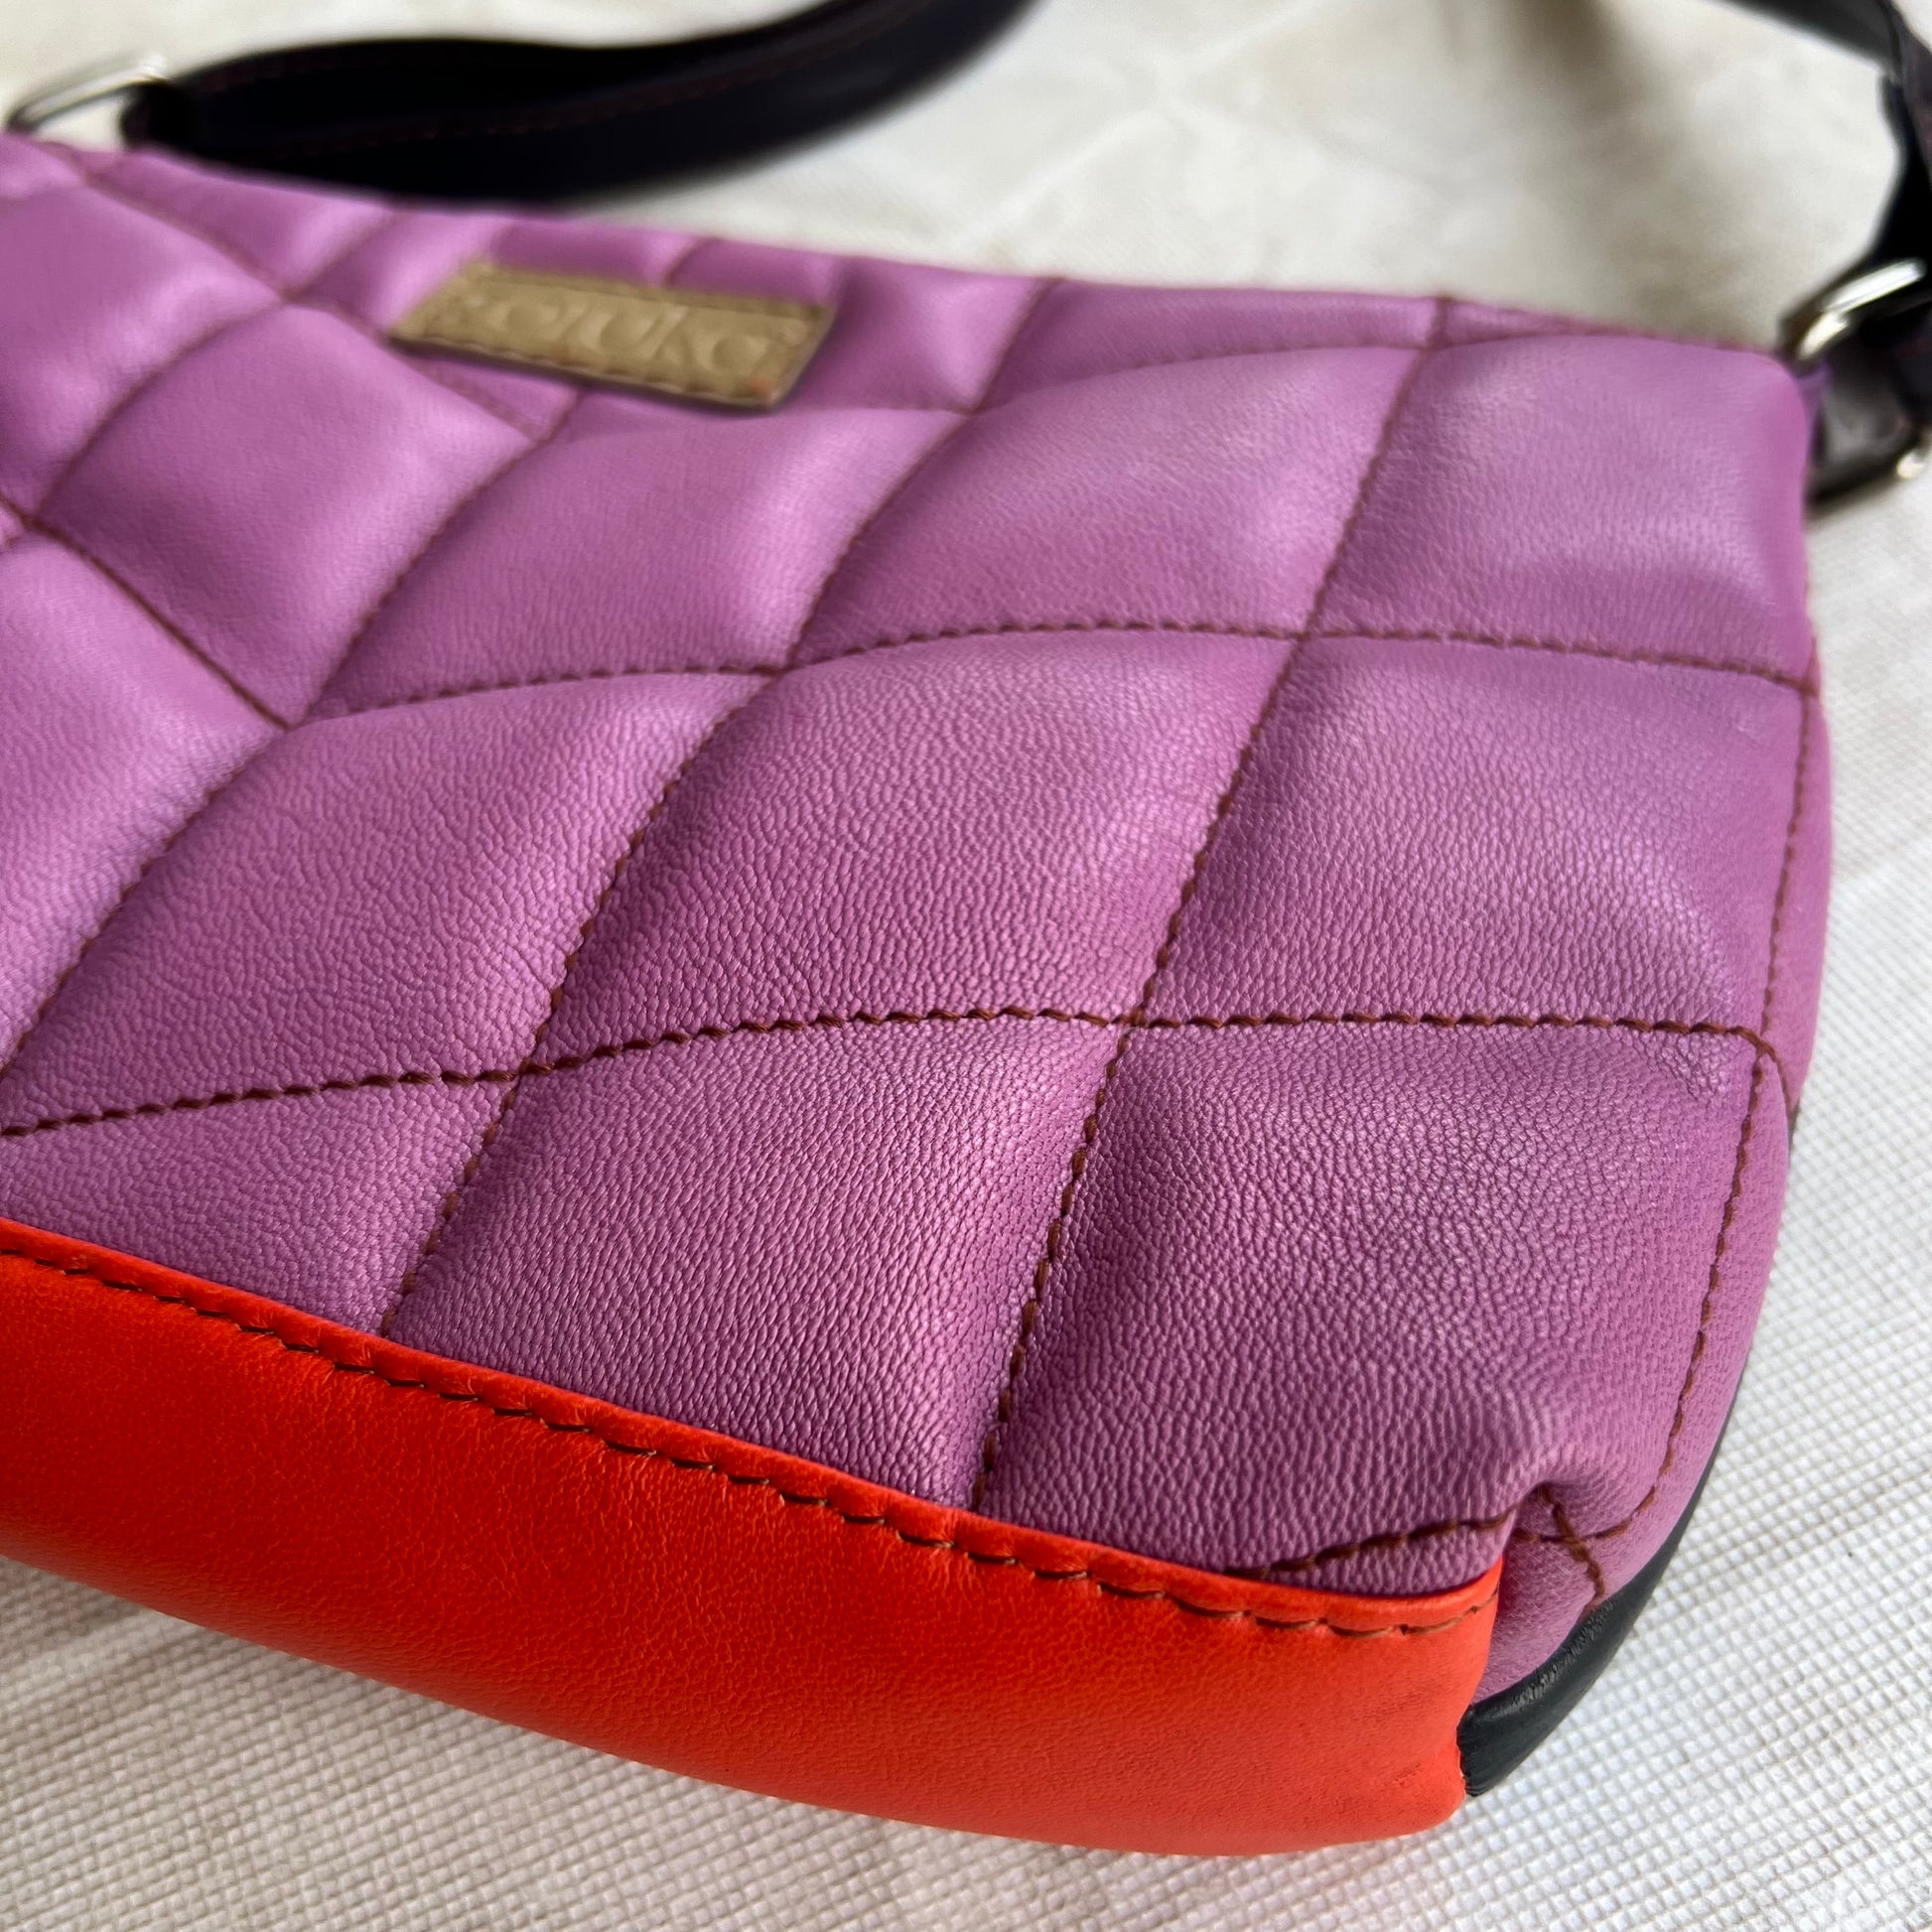 angled bottom view of purple purse with orange base.